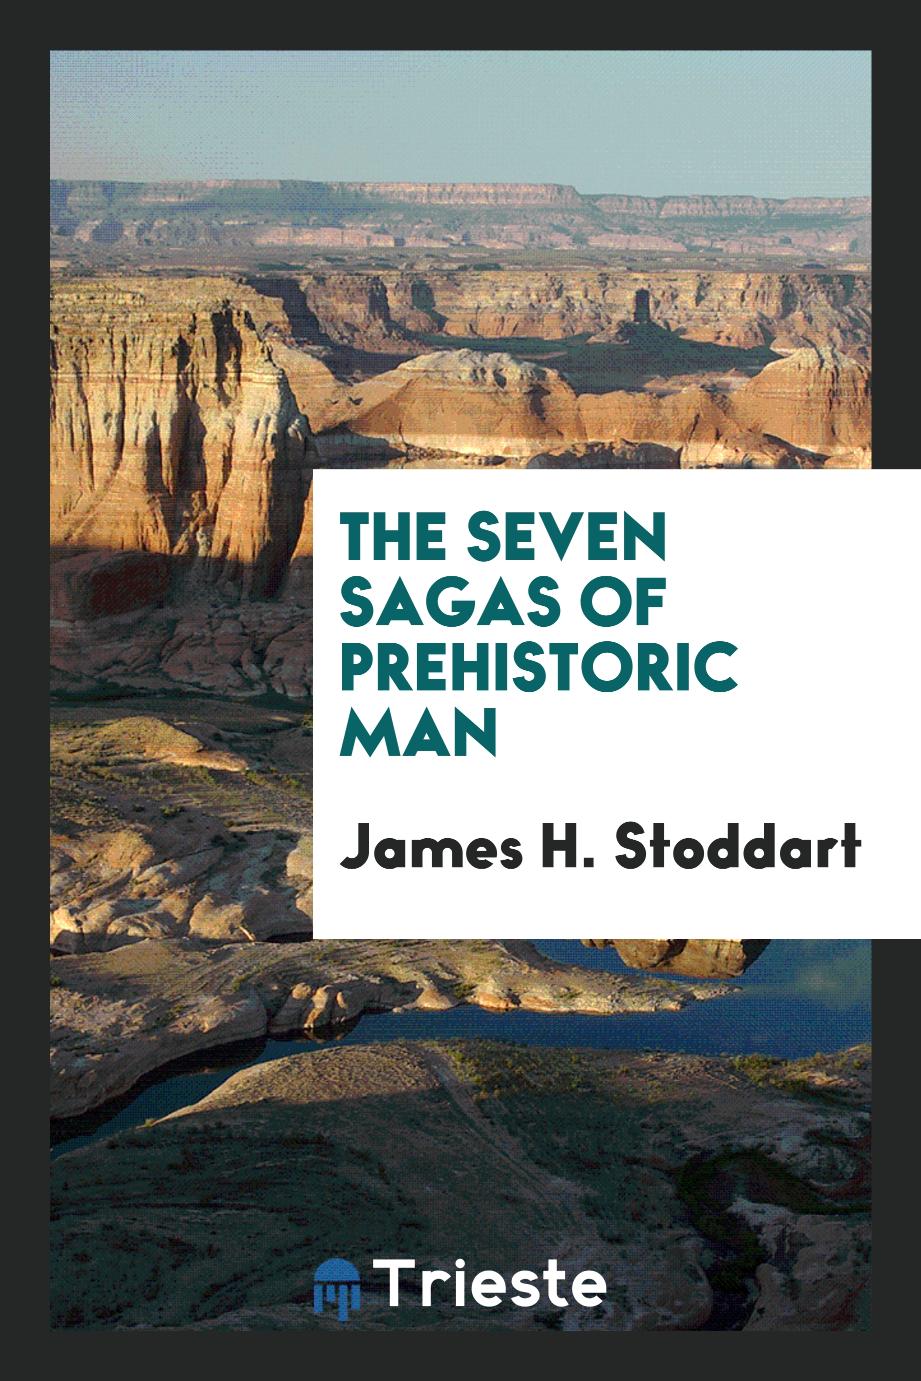 The seven sagas of prehistoric man